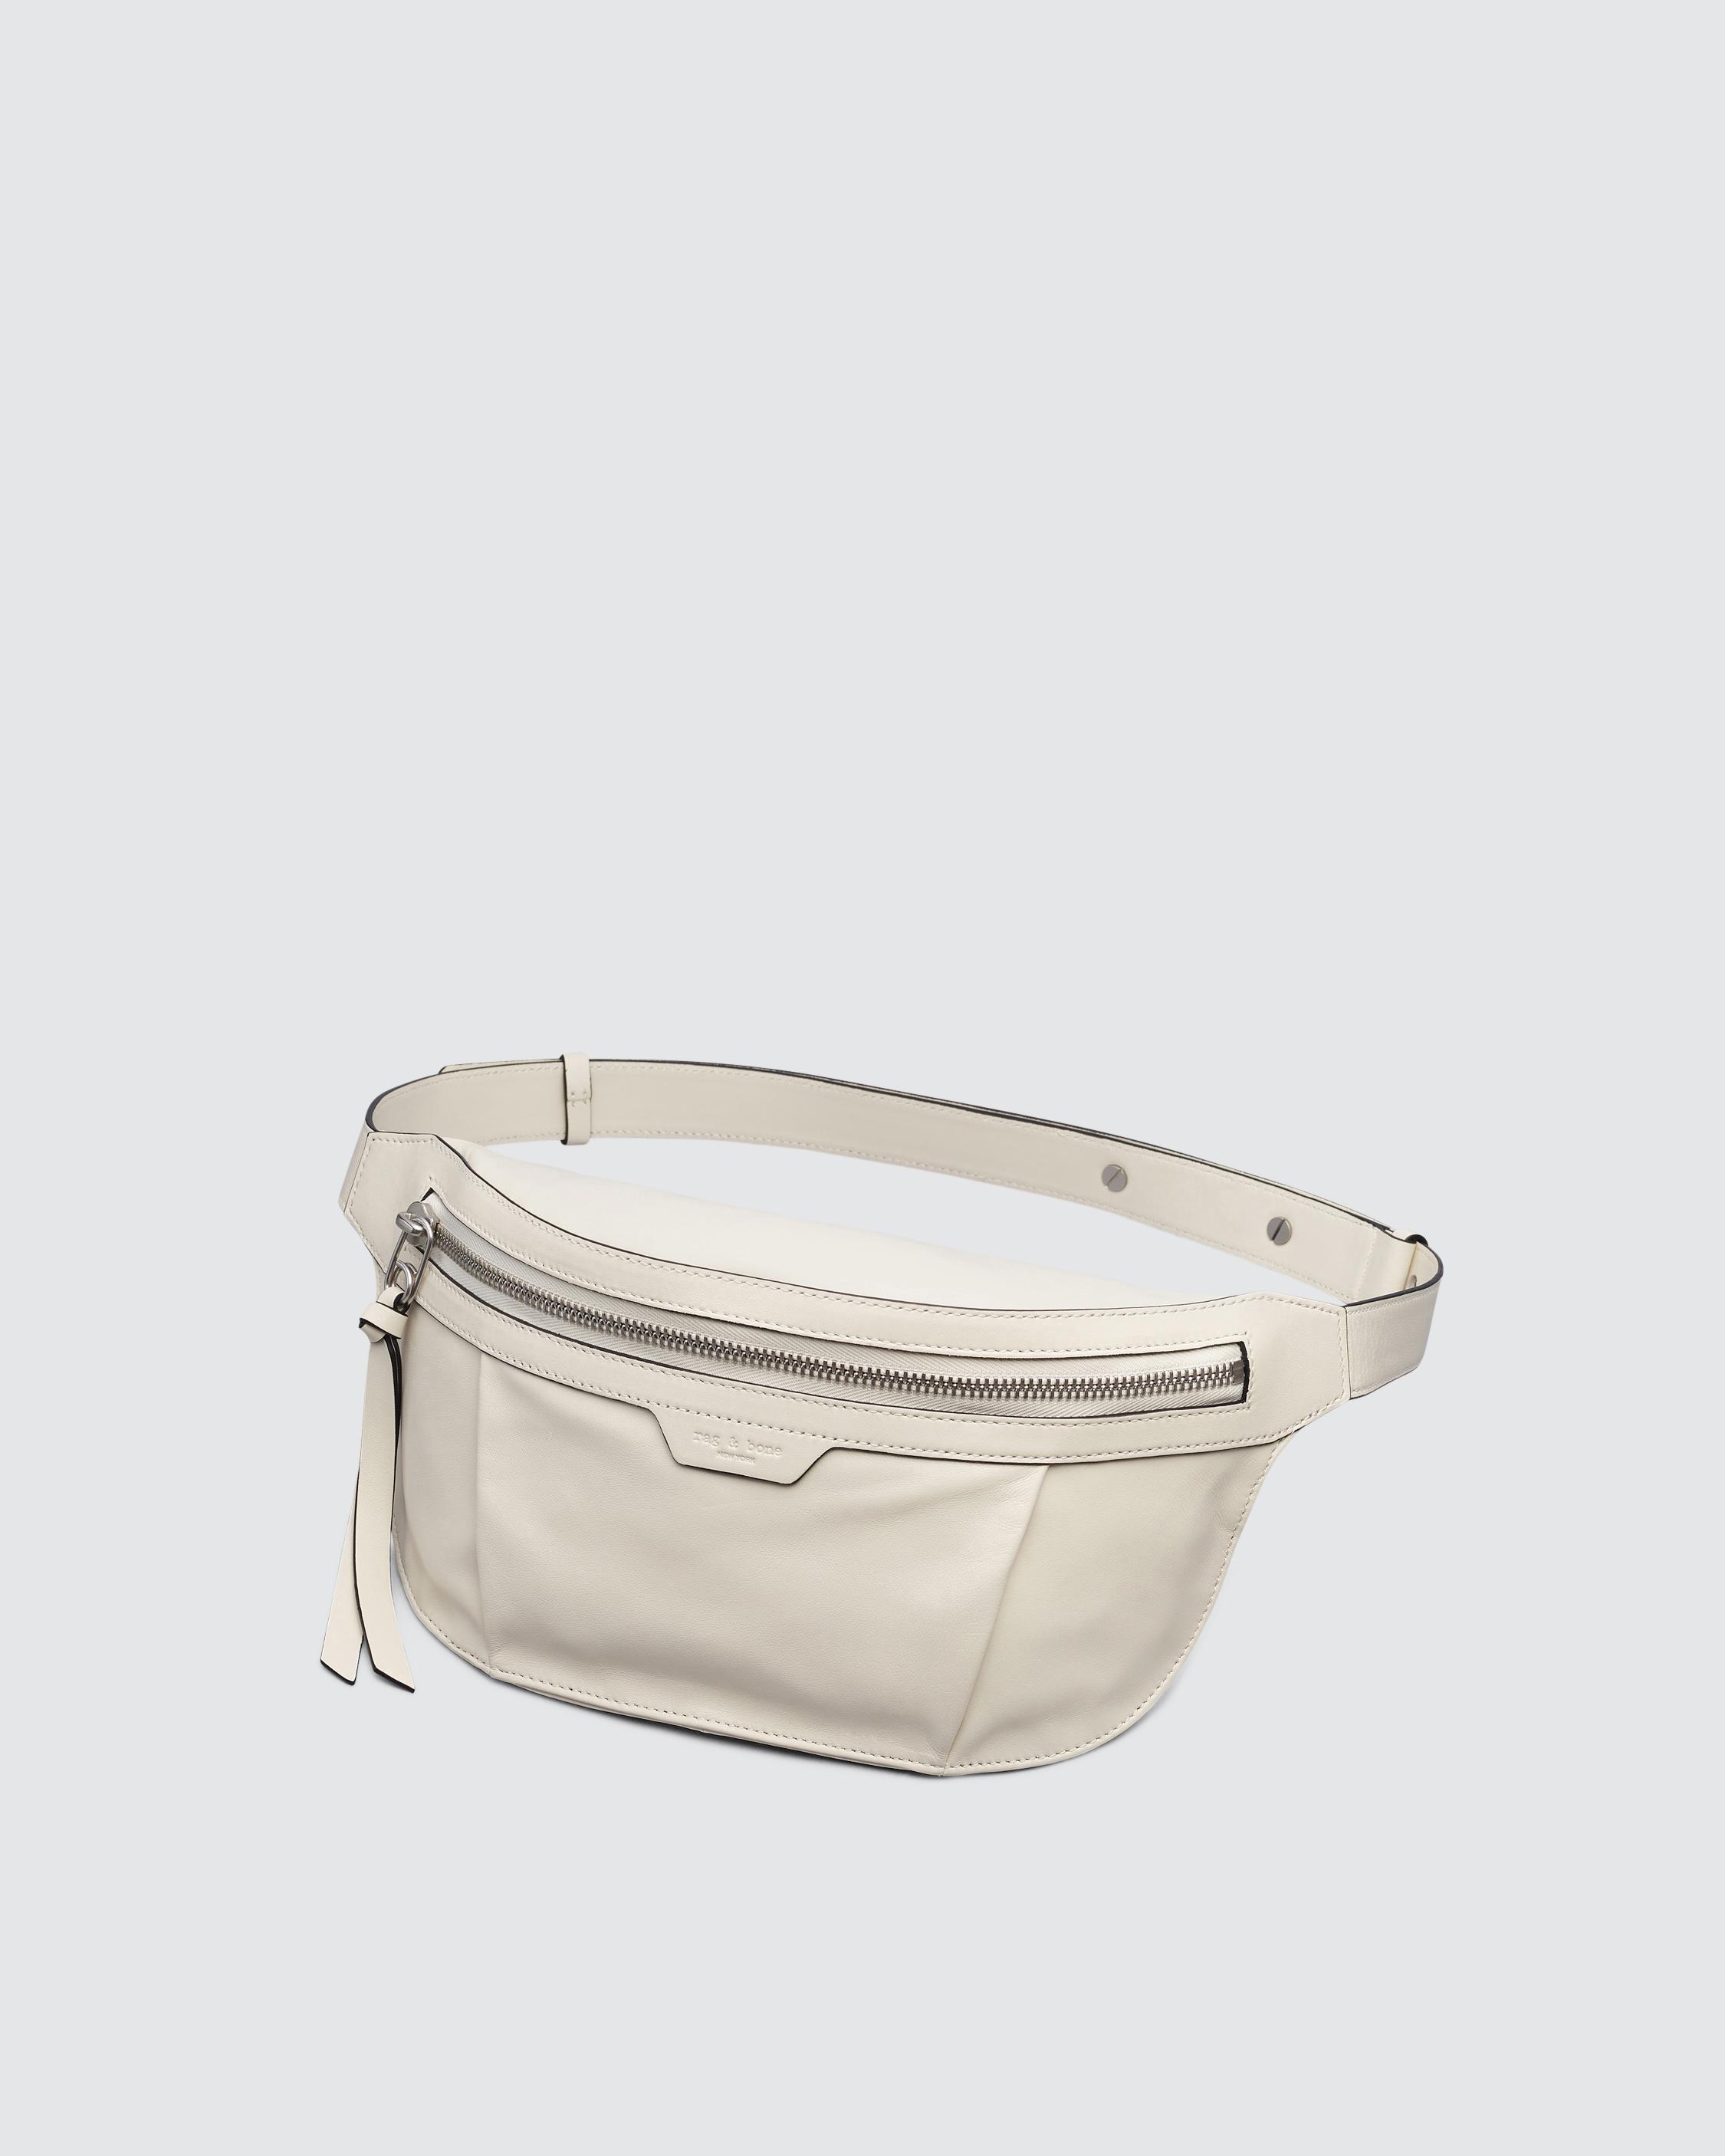 S white leather Pocket bumbag